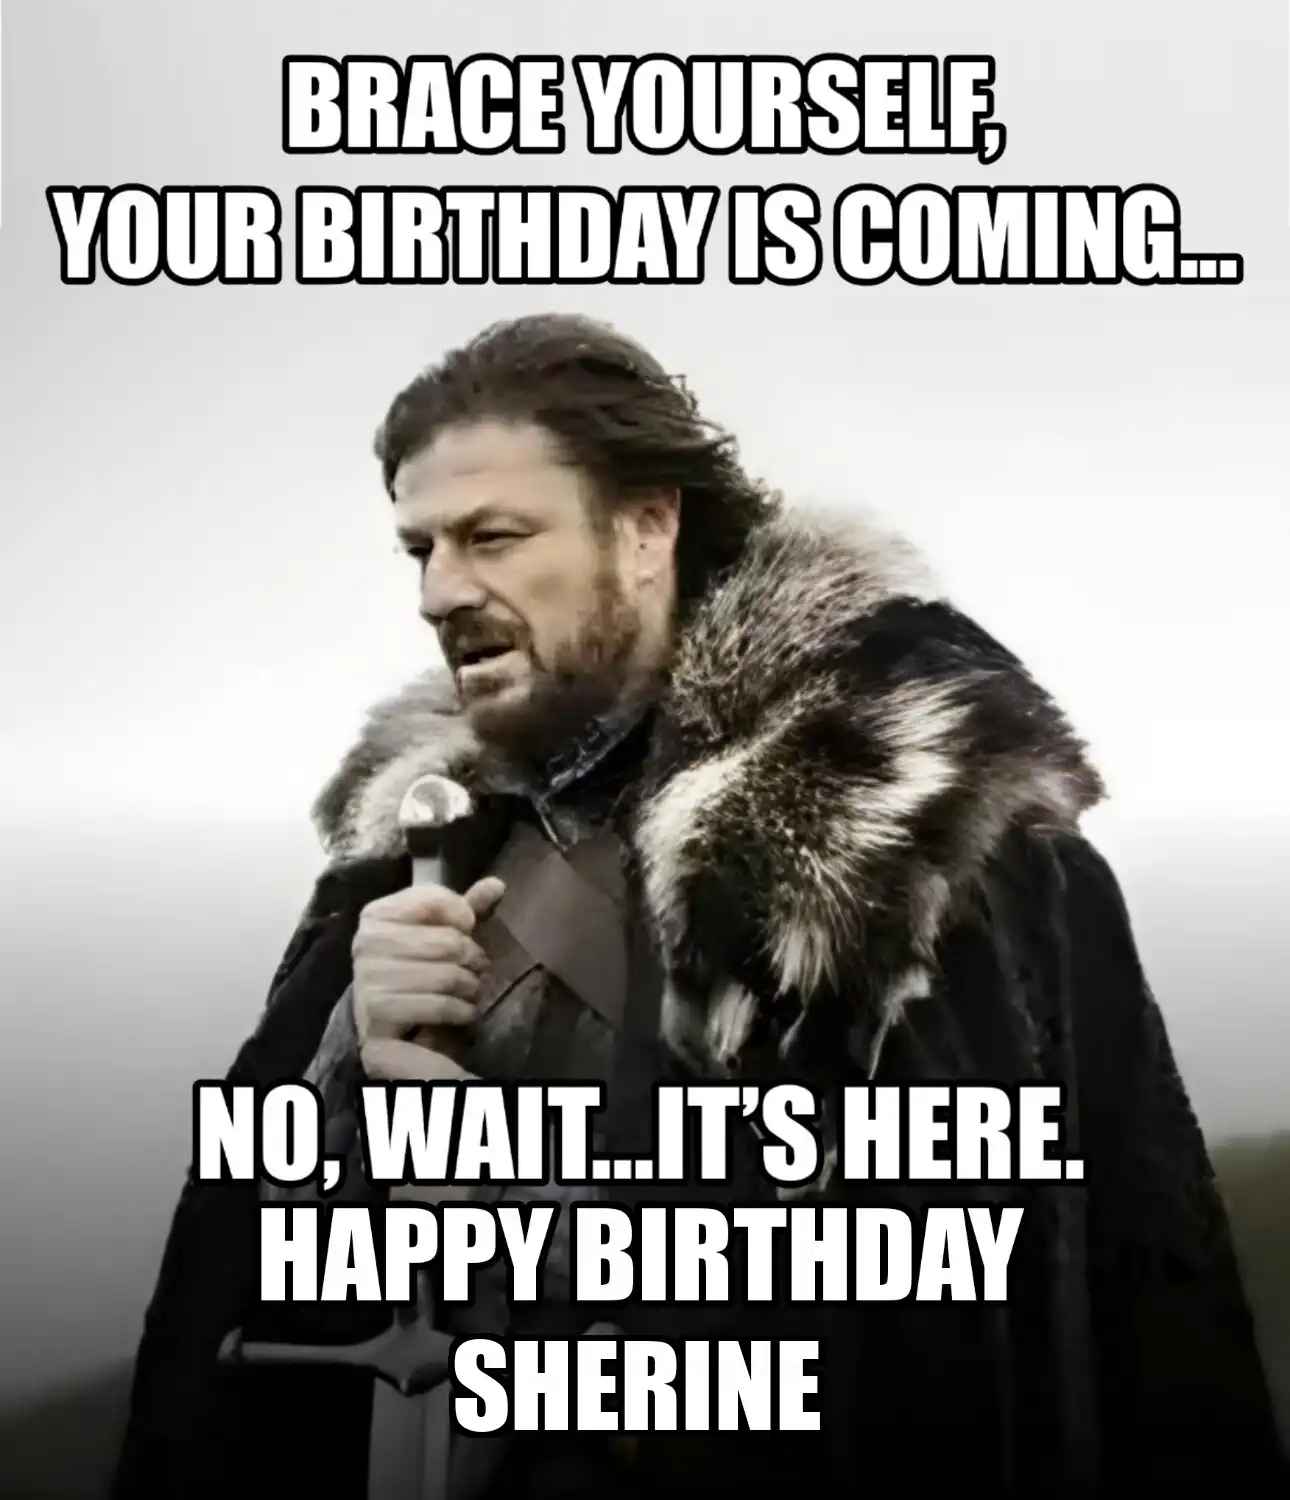 Happy Birthday Sherine Brace Yourself Your Birthday Is Coming Meme